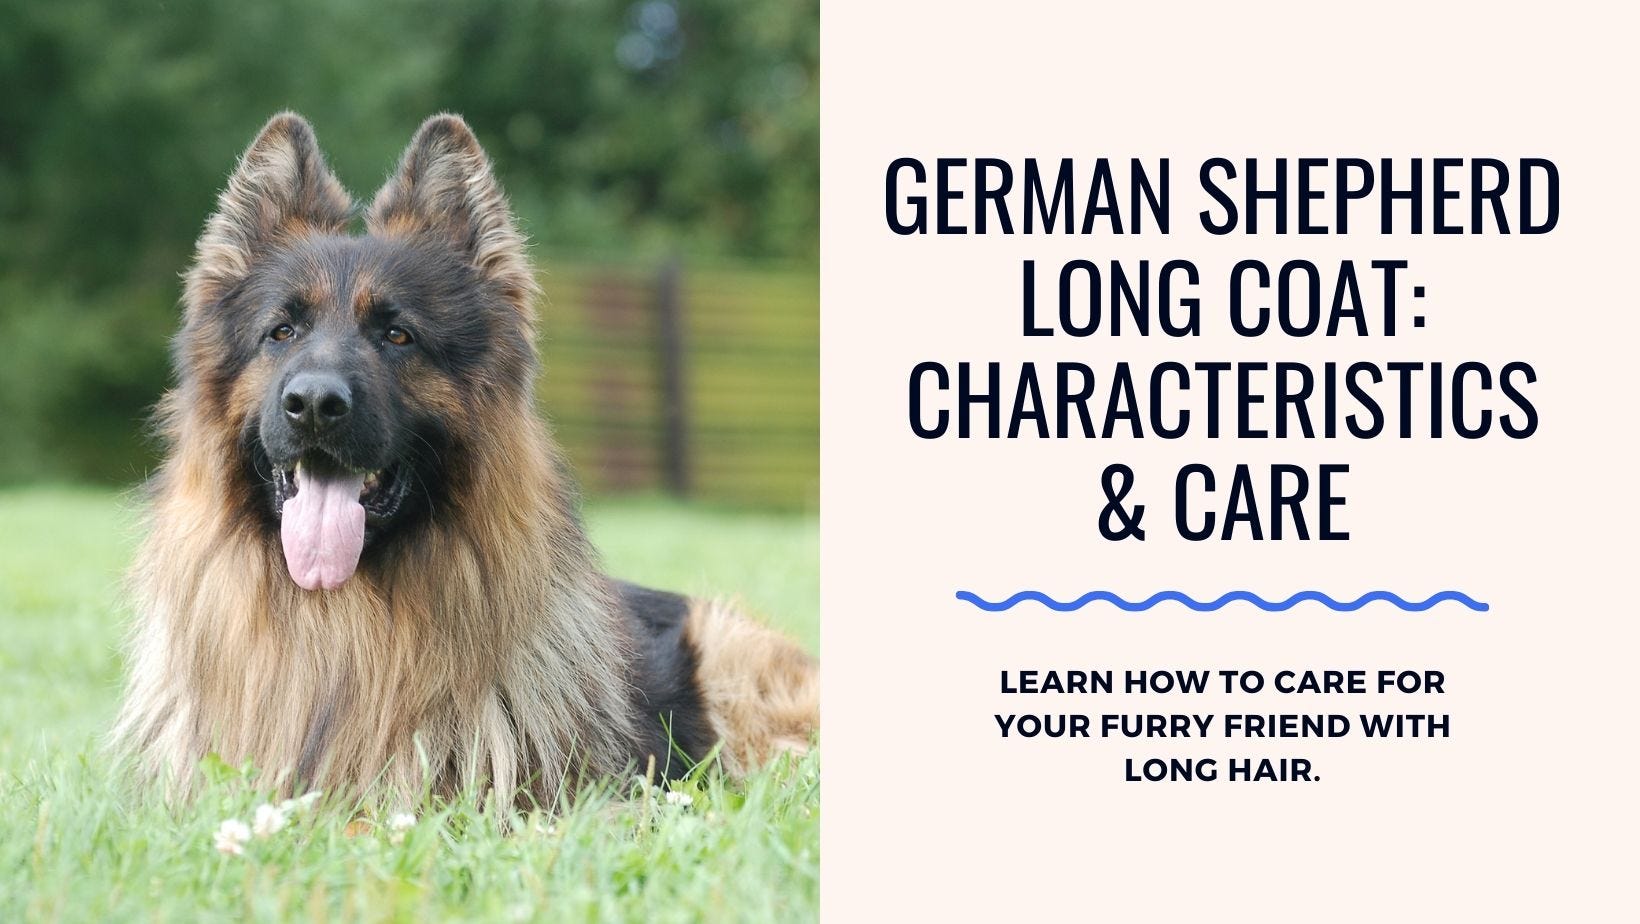 German Shepherd Long Coat: Characteristics and Care Guide